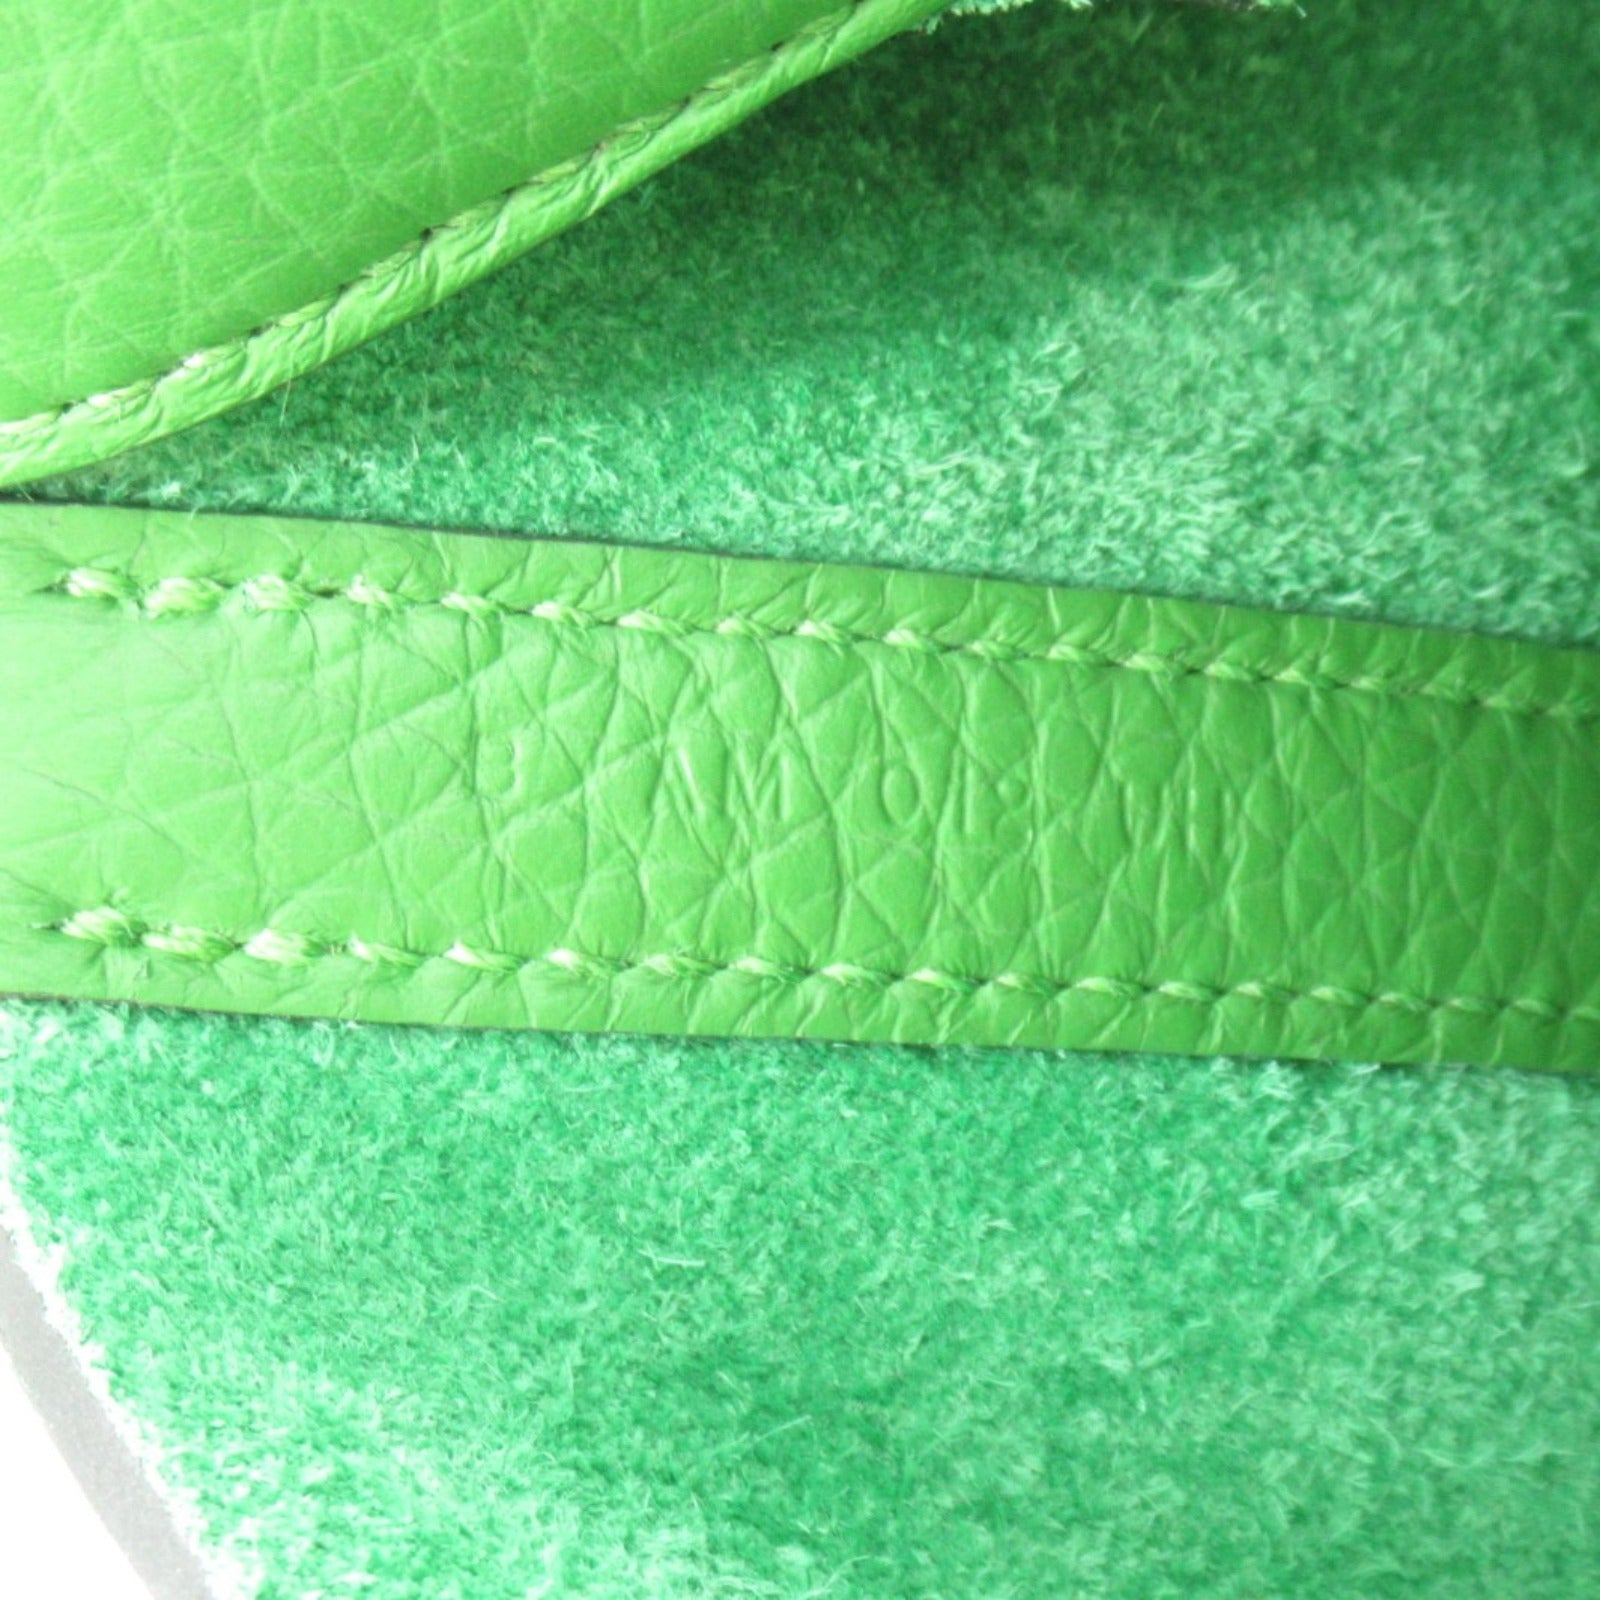 Hermes Hermes Picottan P.M. Eckra Yucca Tote Bag Tortoise Bag Leather  Clemence  Green Line